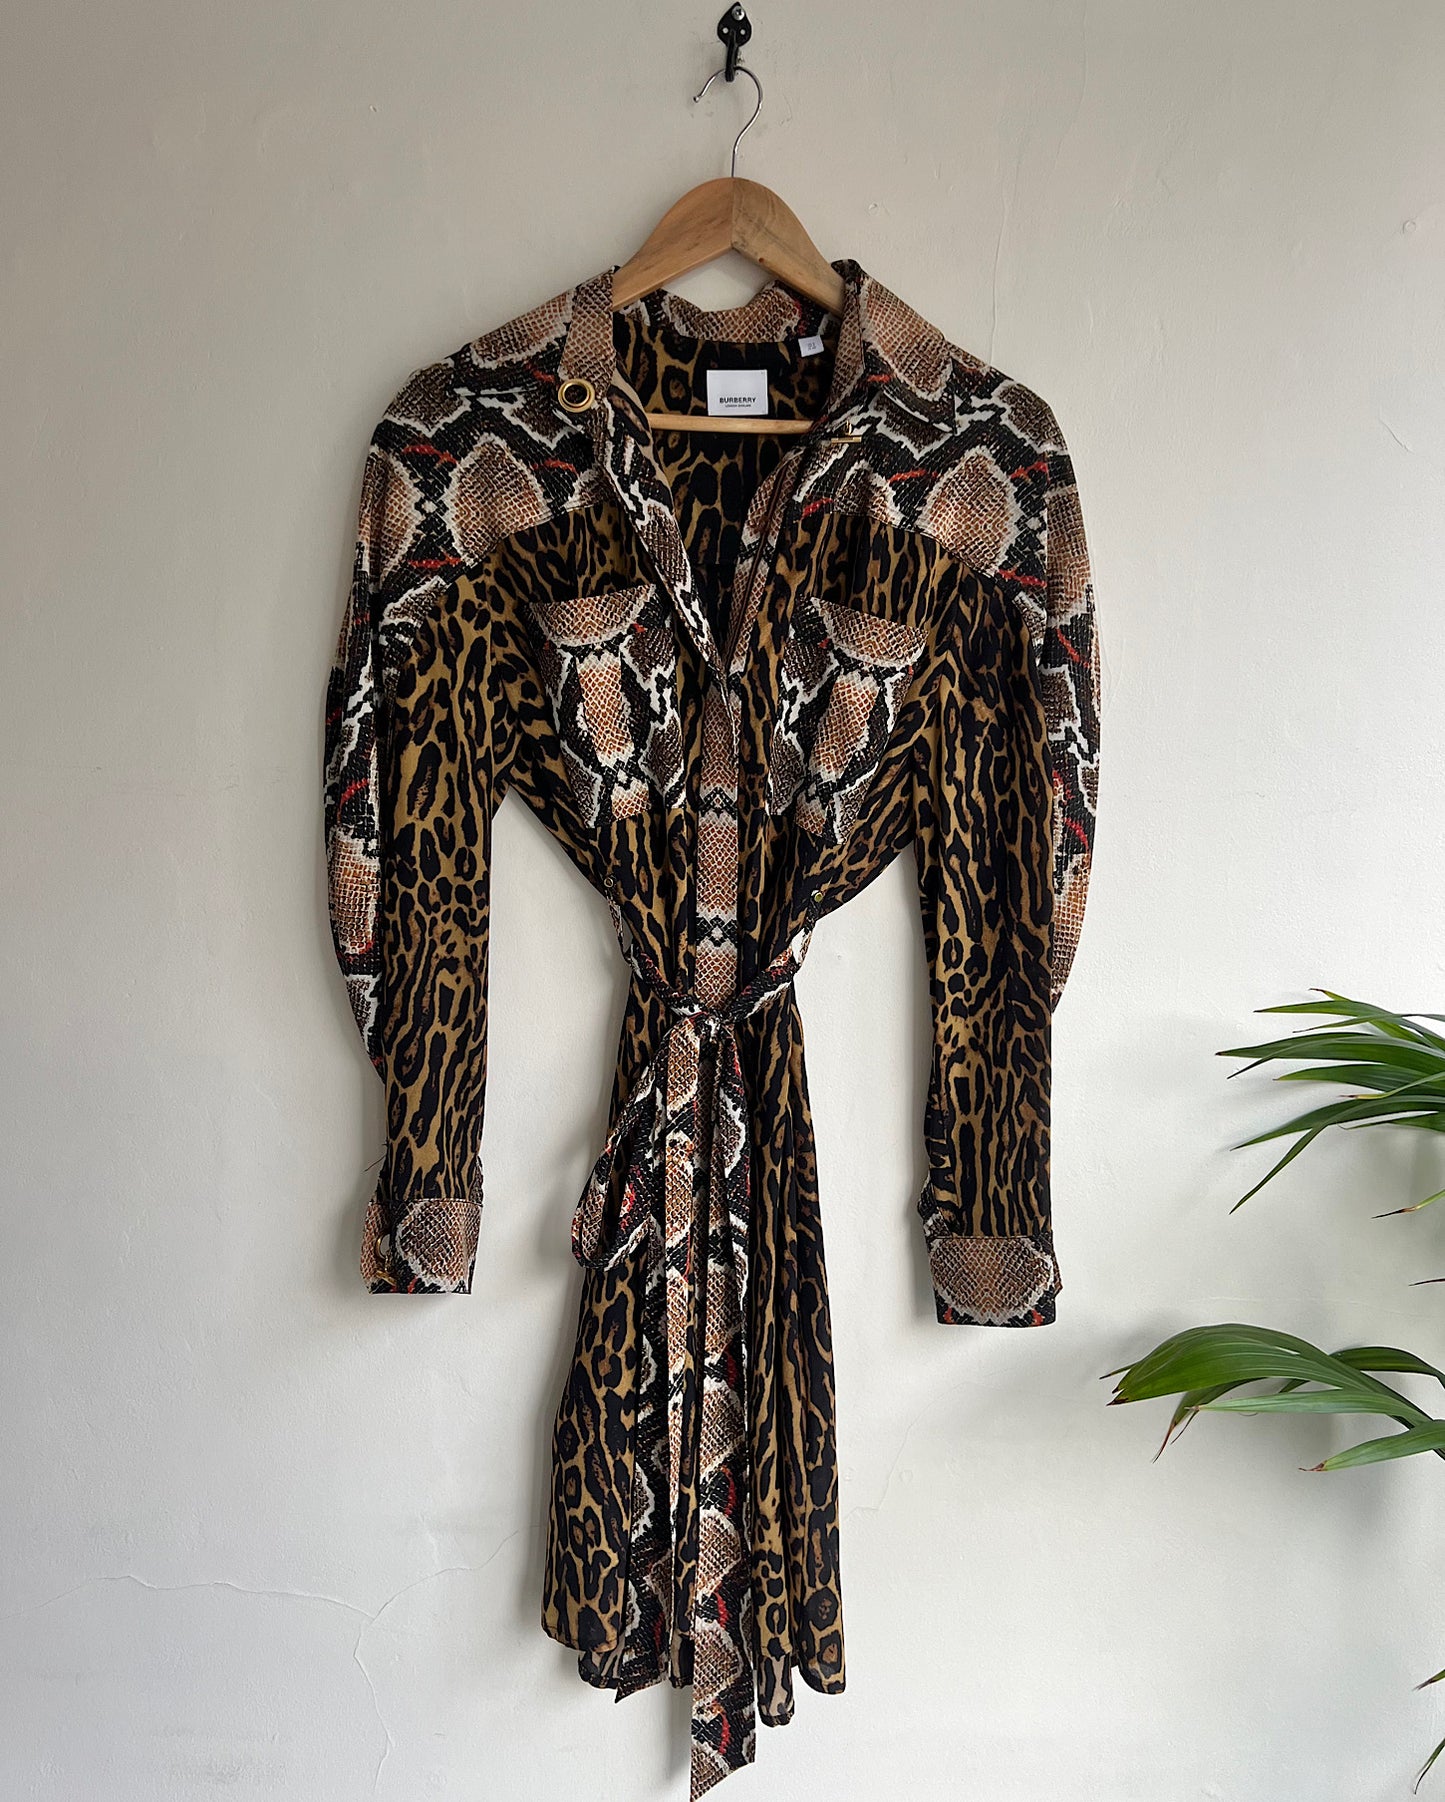 SALE - Animal Print Dress ~ Size 8